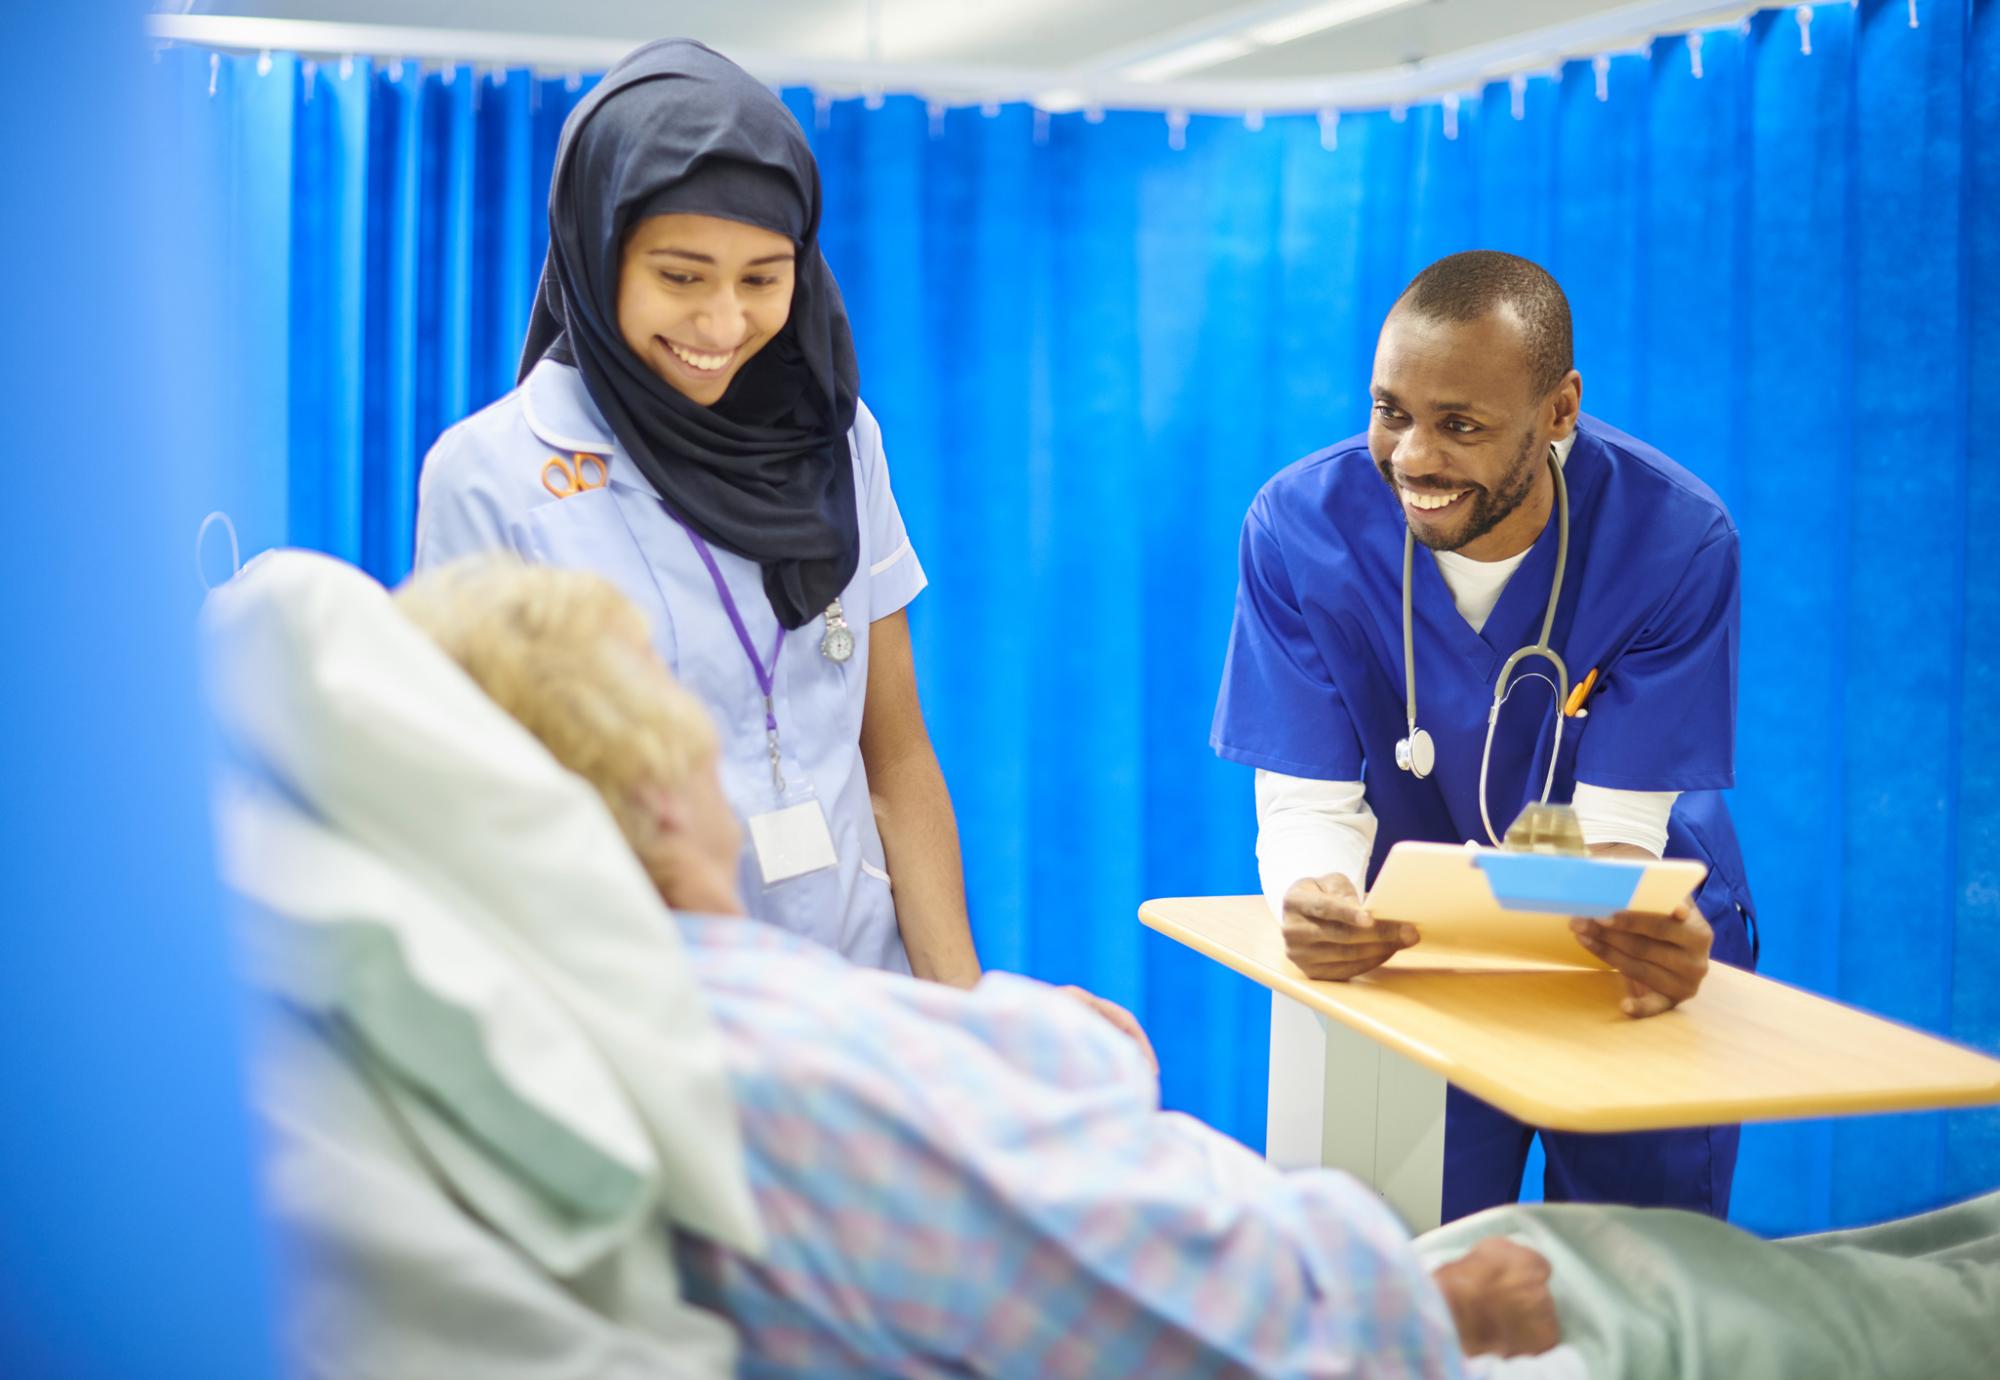 Nurses talking with a patient